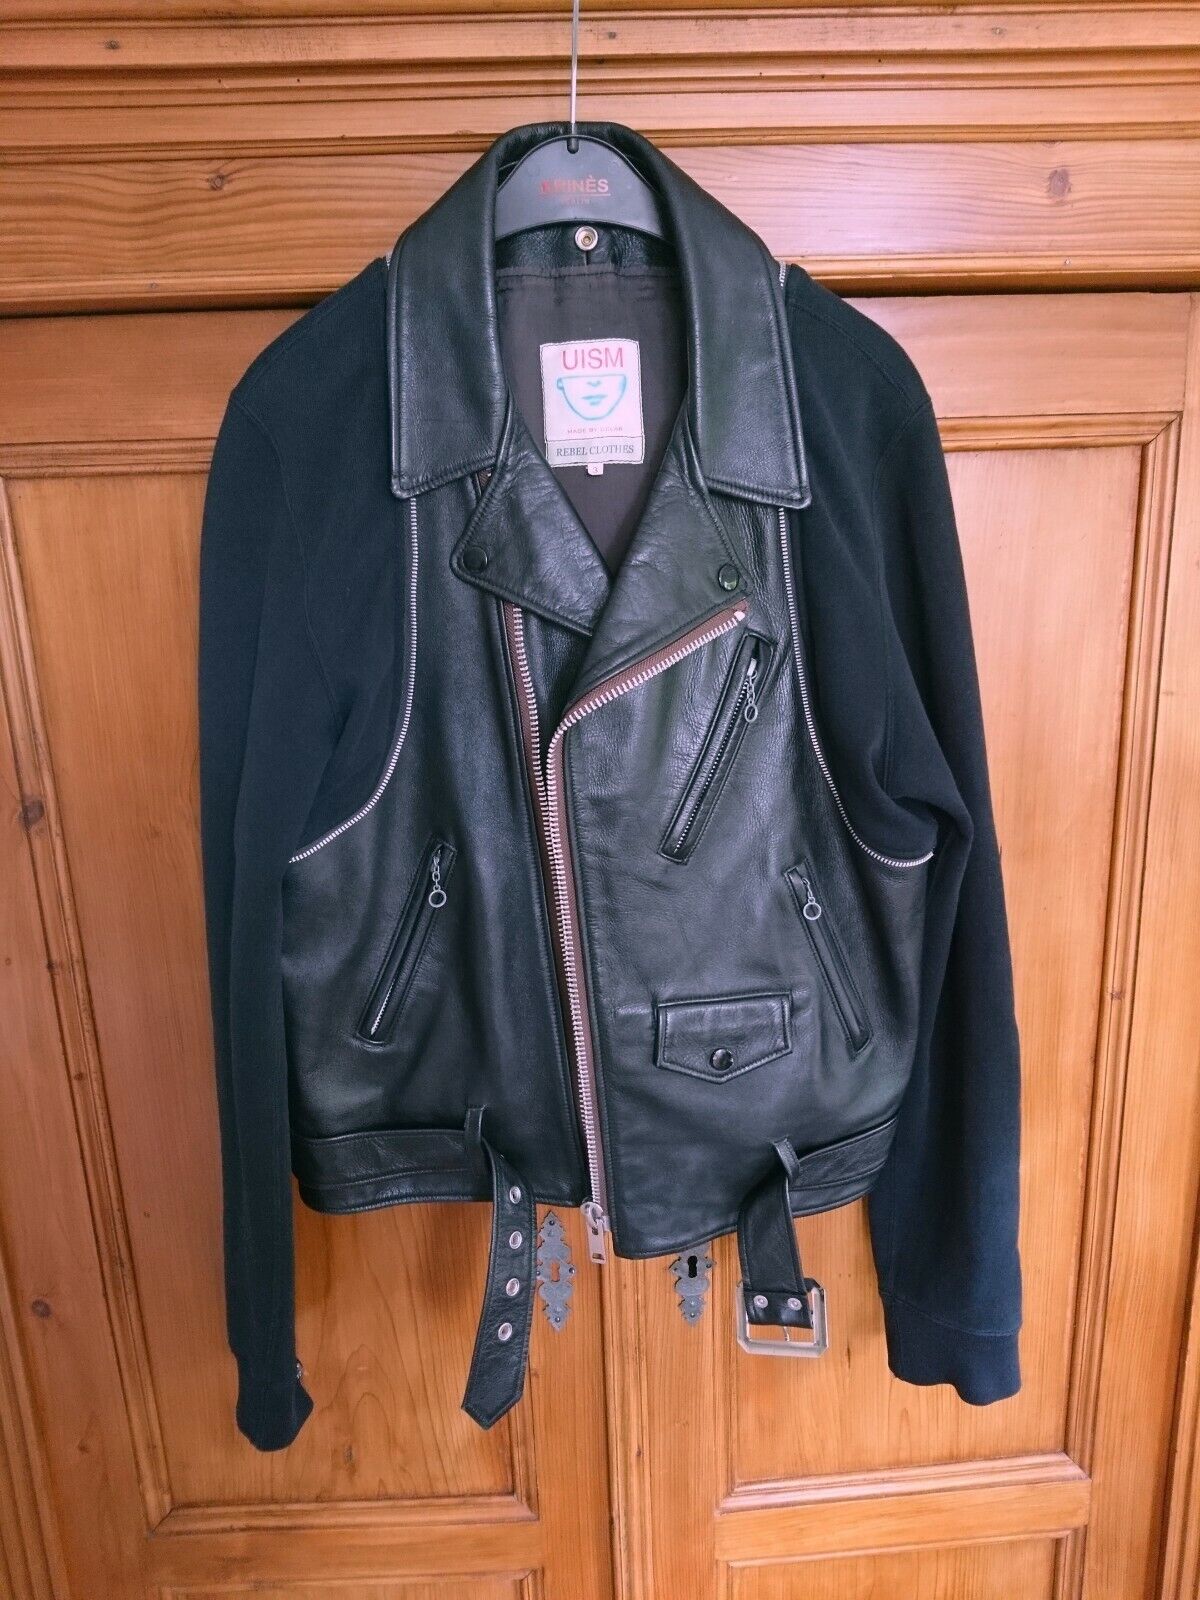 Undercover Undercoverism Hybrid Leather Kapital Jacket Visvim 3 L M